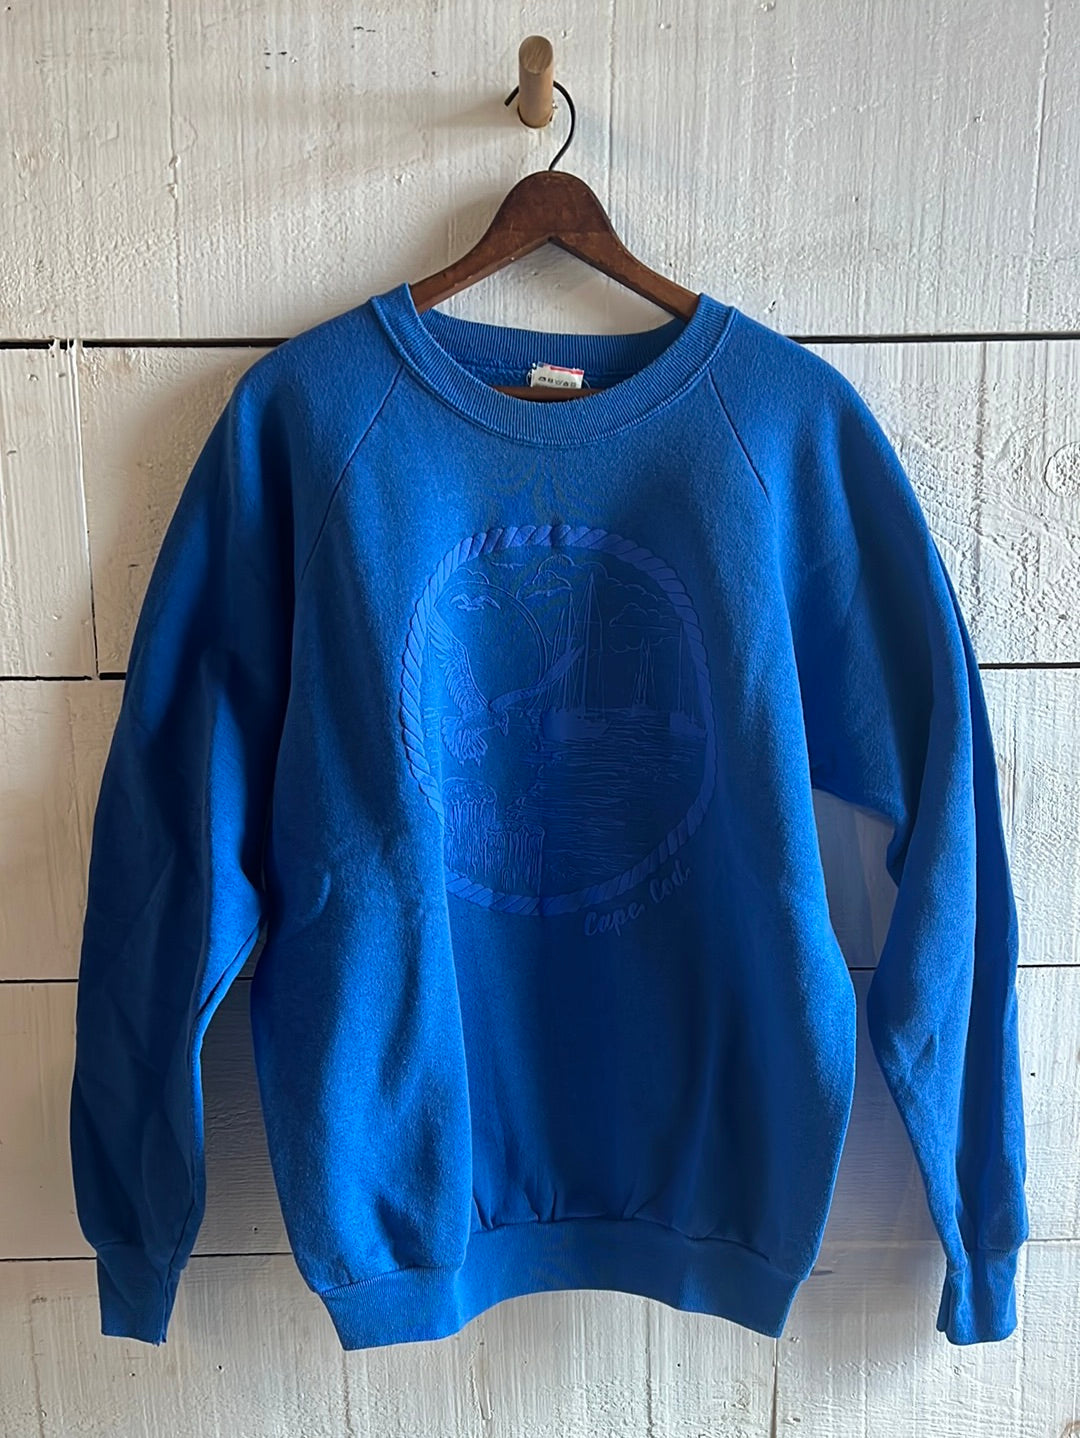 Vintage Raglan Sweatshirt - Cape Cod